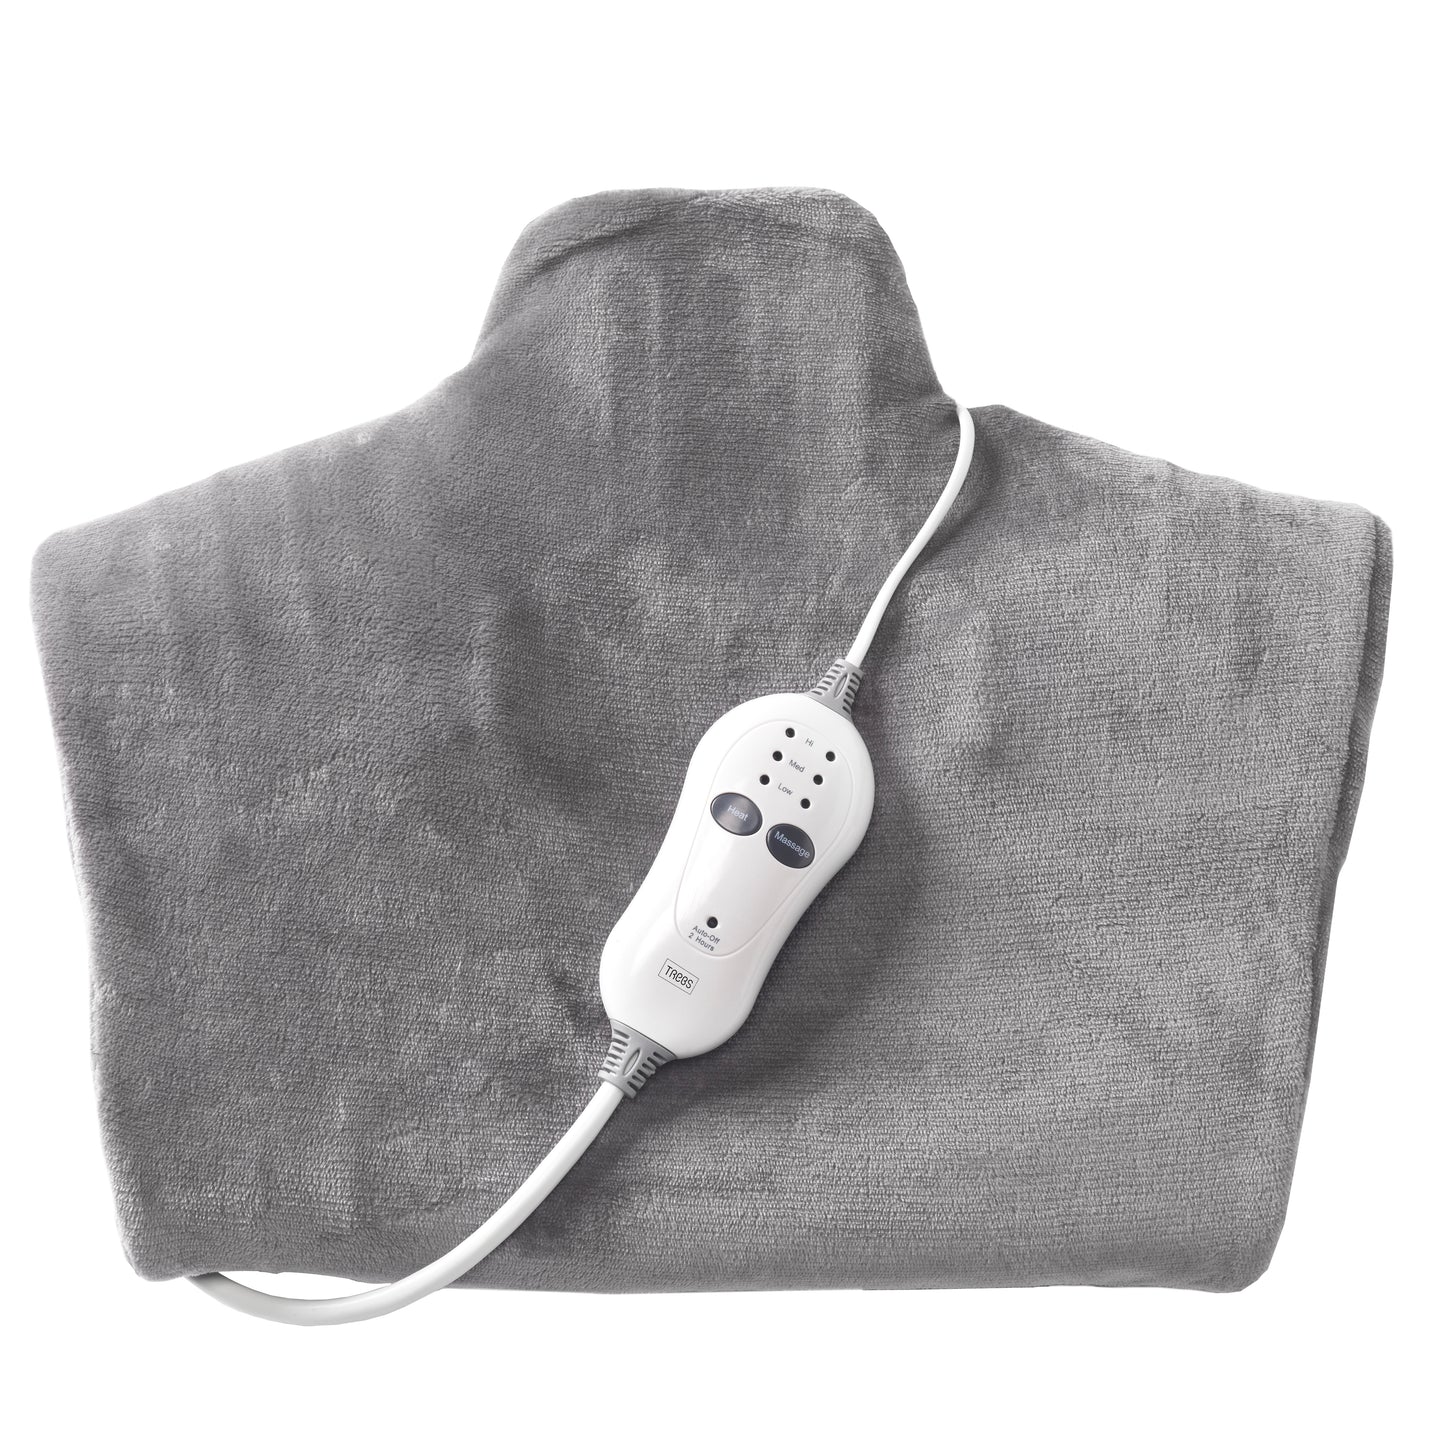 Trebs 99360 - Electric 2-in-1 Warm and Massage Cushion Comfortheat Fleece